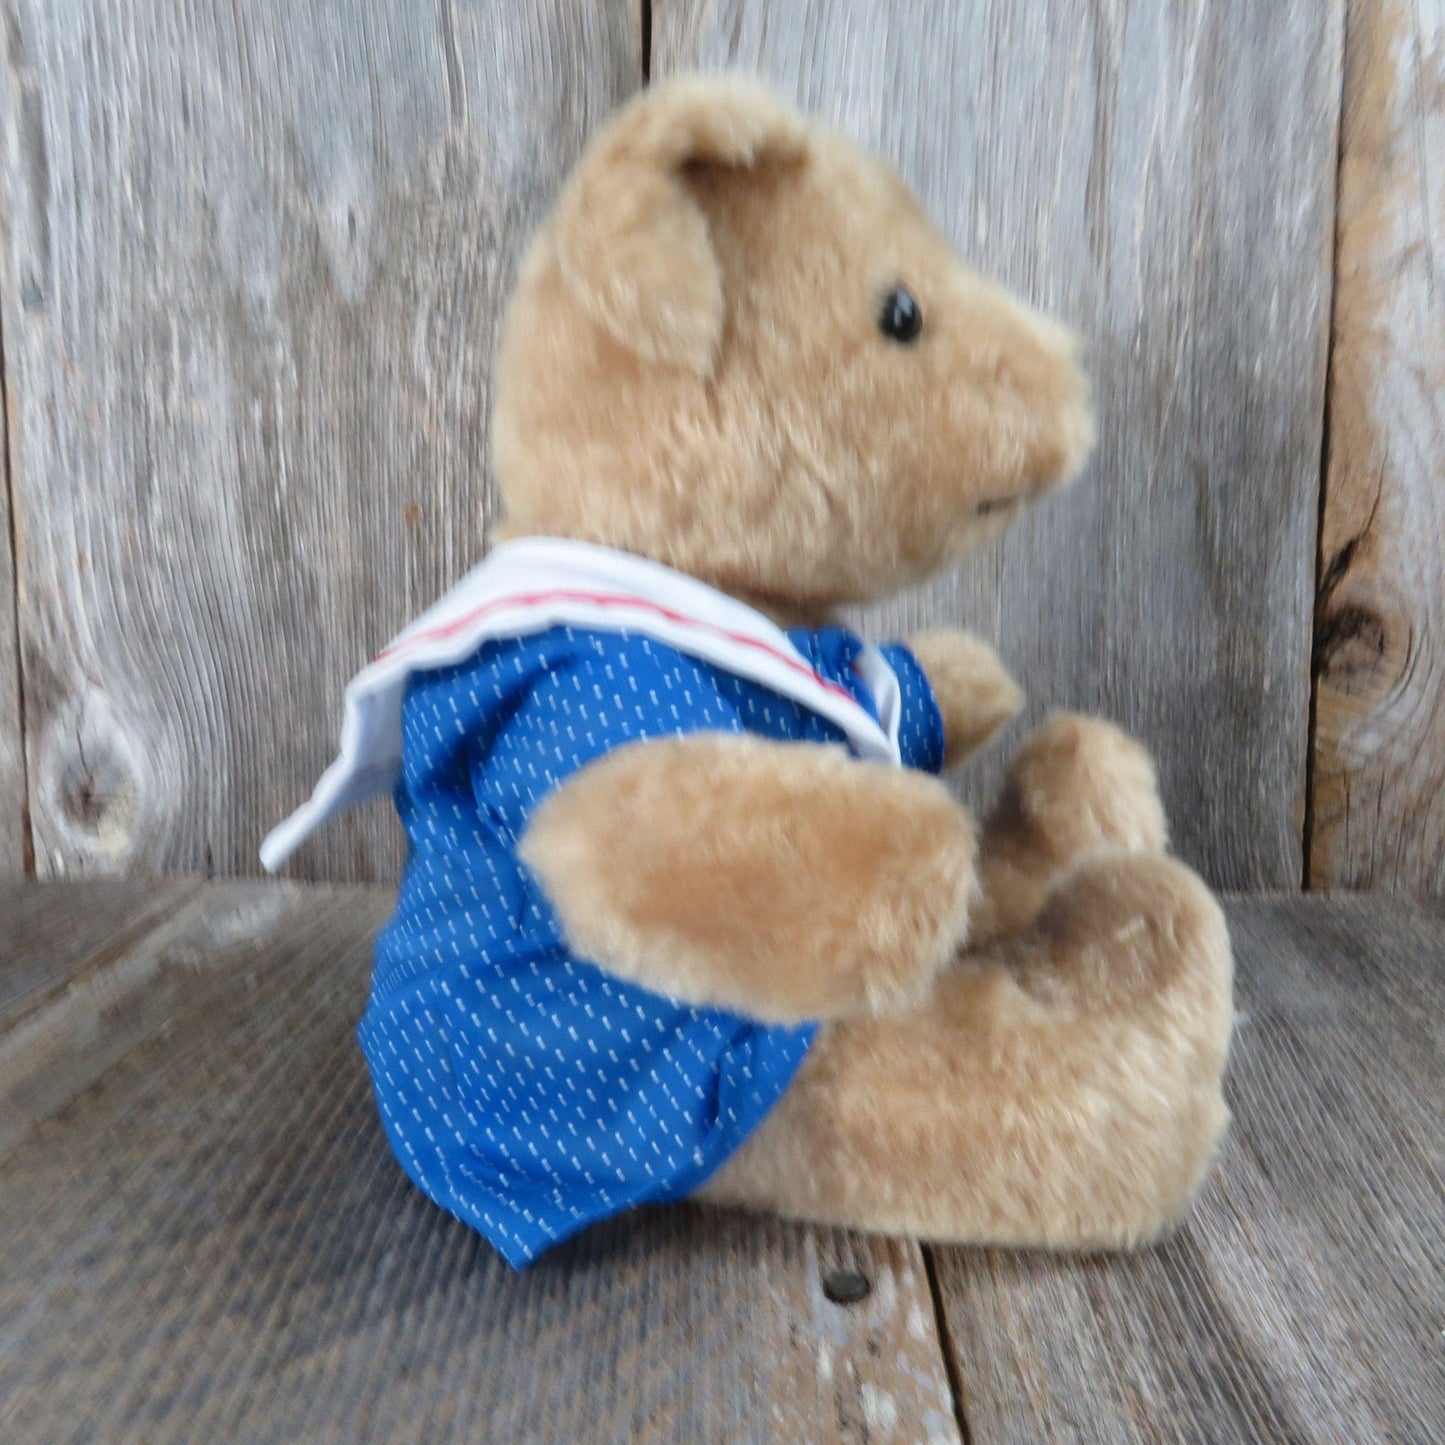 Vintage Teddy Bear Plush Blue Polka Dot Sailor Dress Stuffed Animal